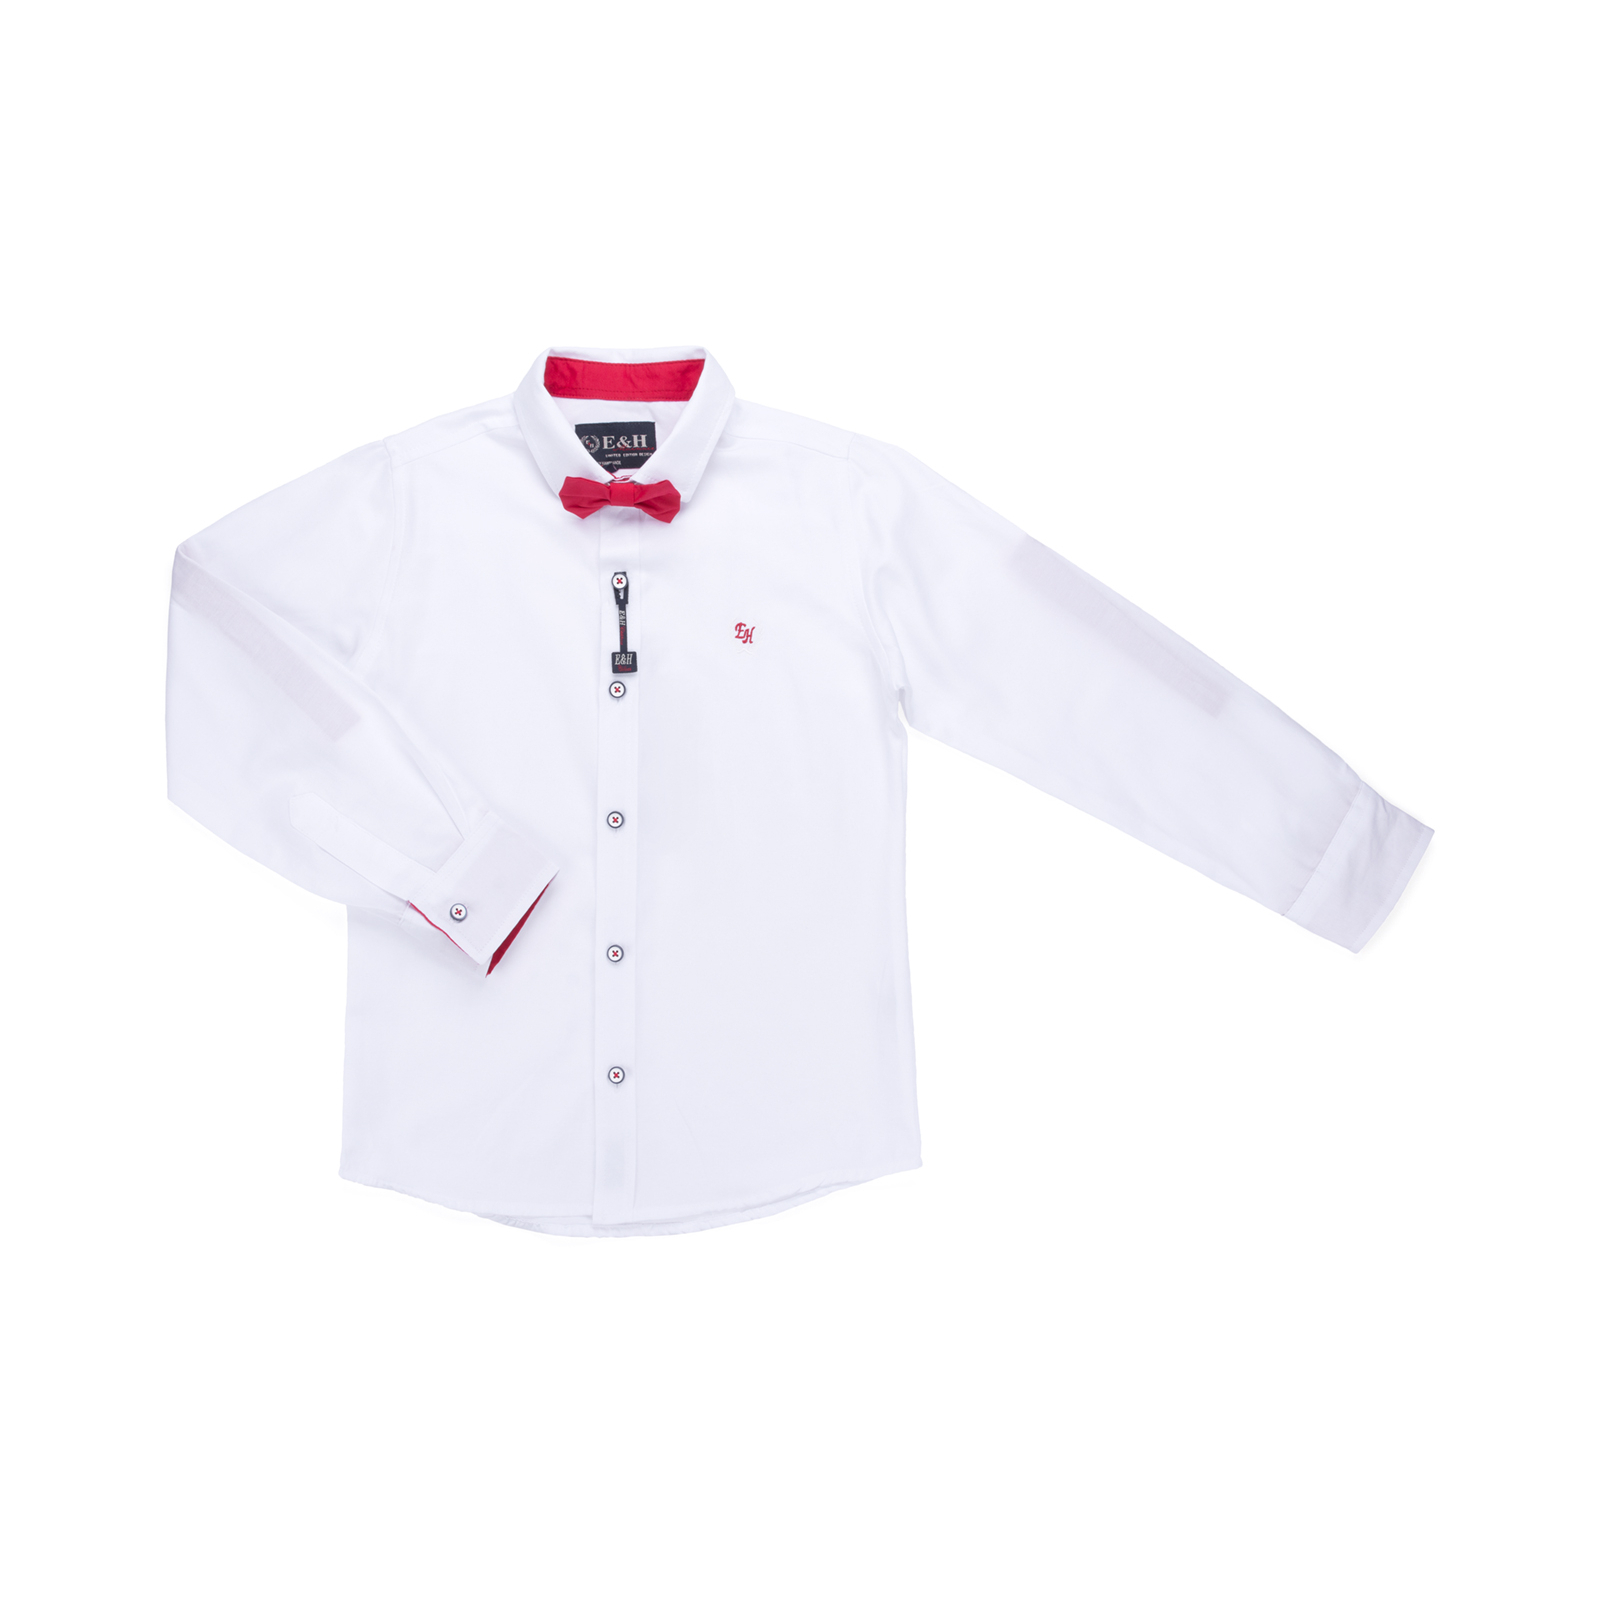 Рубашка E&H с красной бабочкой (G-233-140B-white-red)